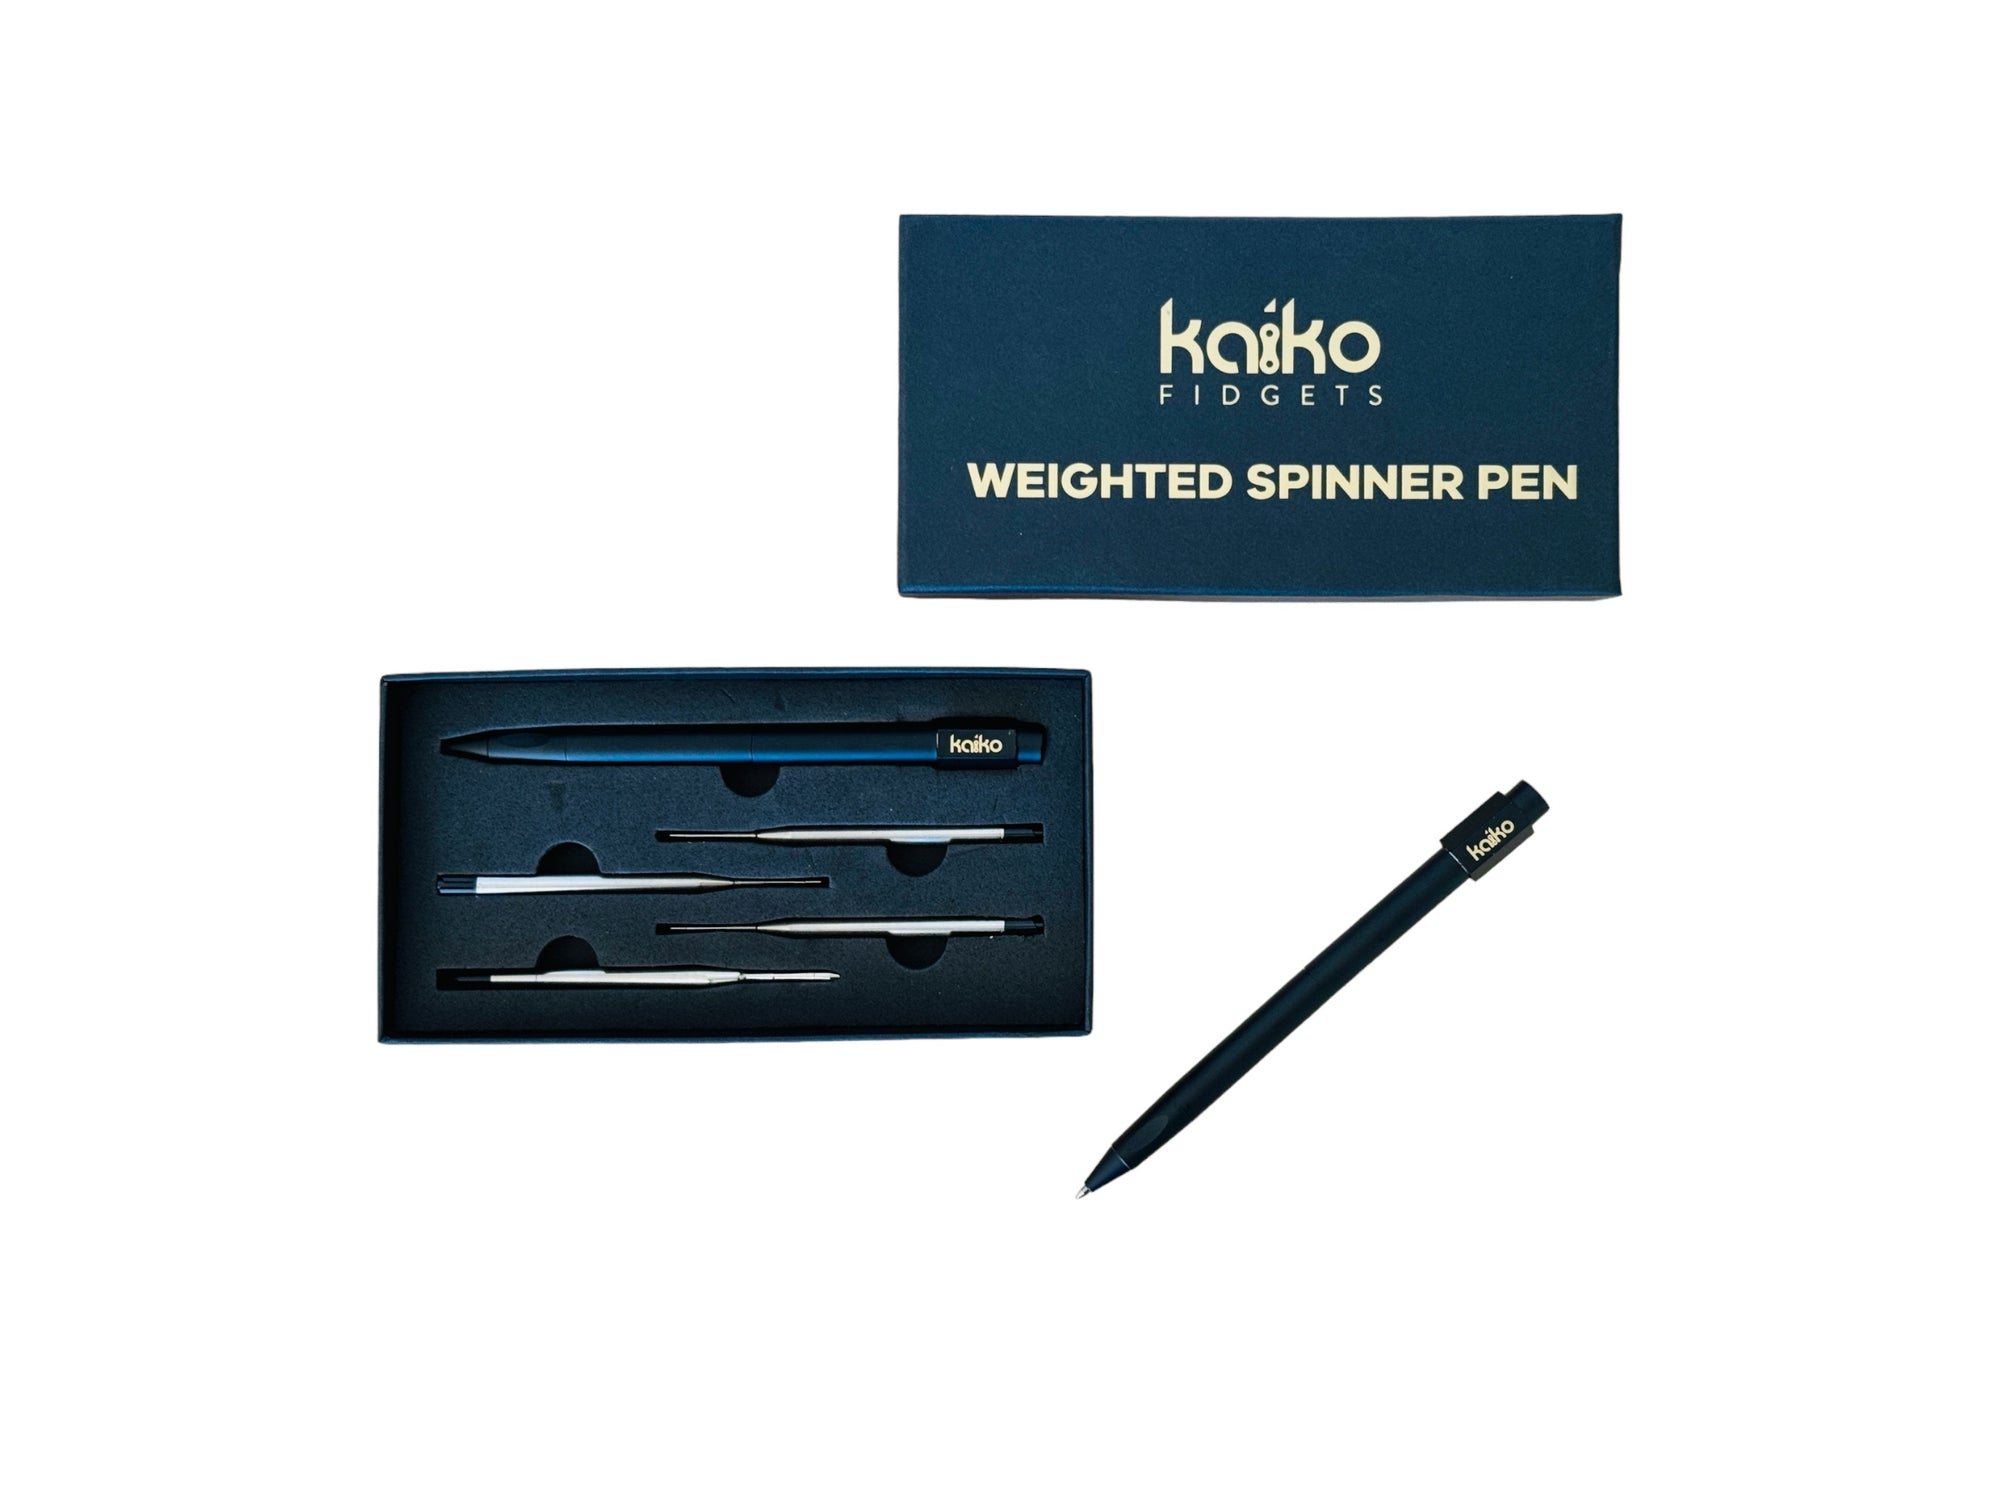 Kaiko Weighted Spinner Pen Fidget